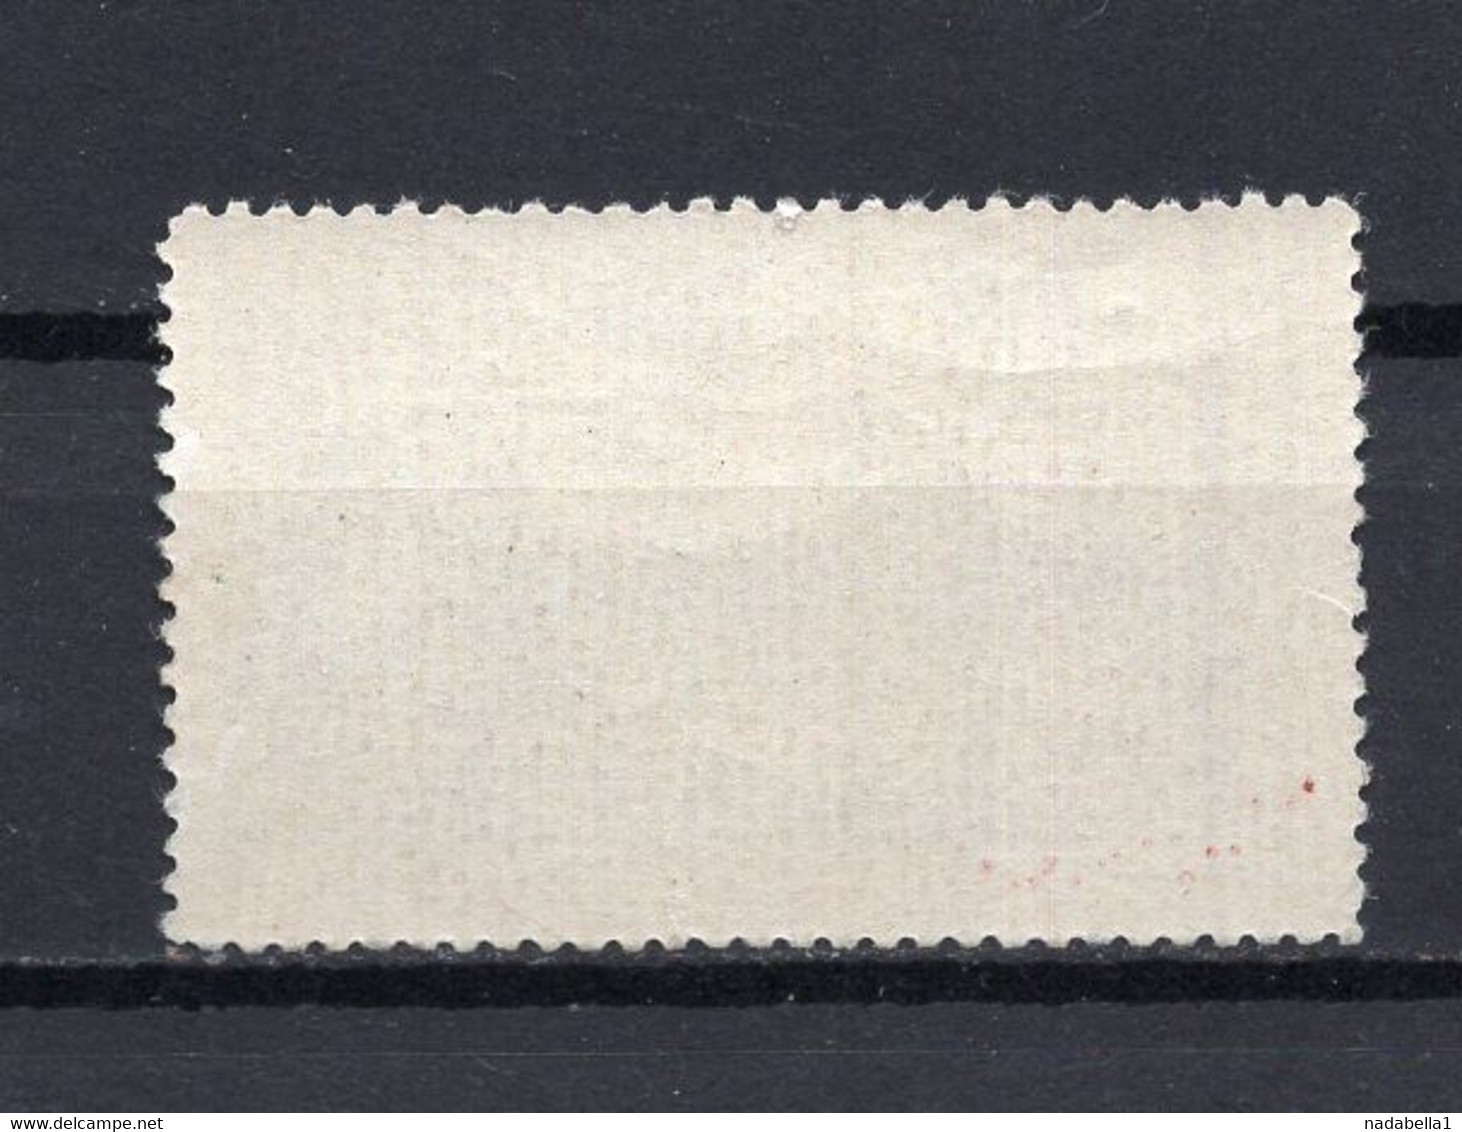 1931. ROMANIA,REVENUE STAMP,2 LEI,MNH - Steuermarken